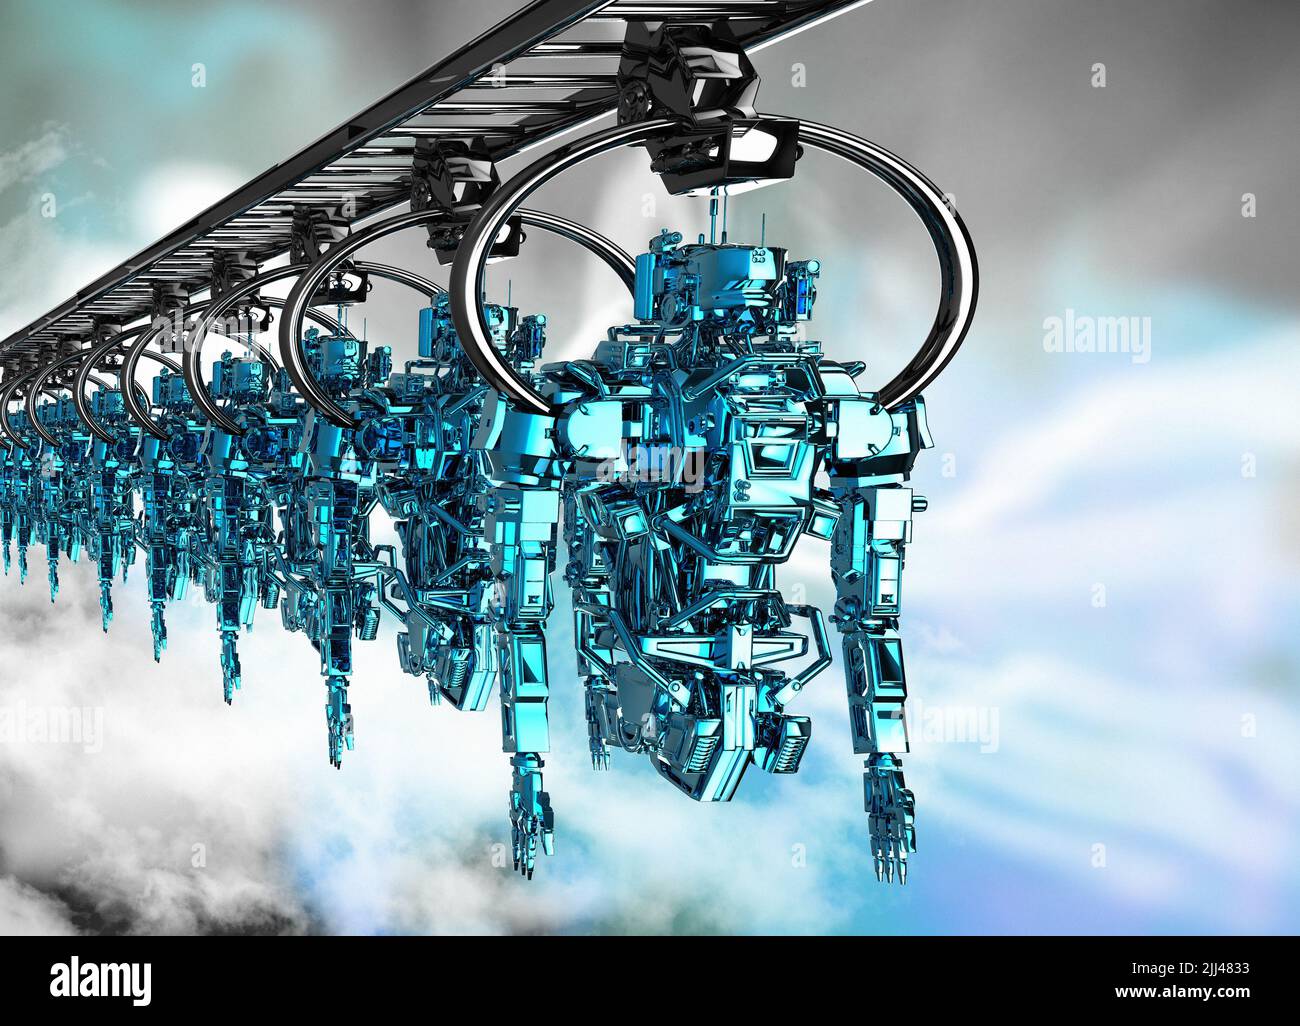 Robot manufacturing, illustration. Stock Photo